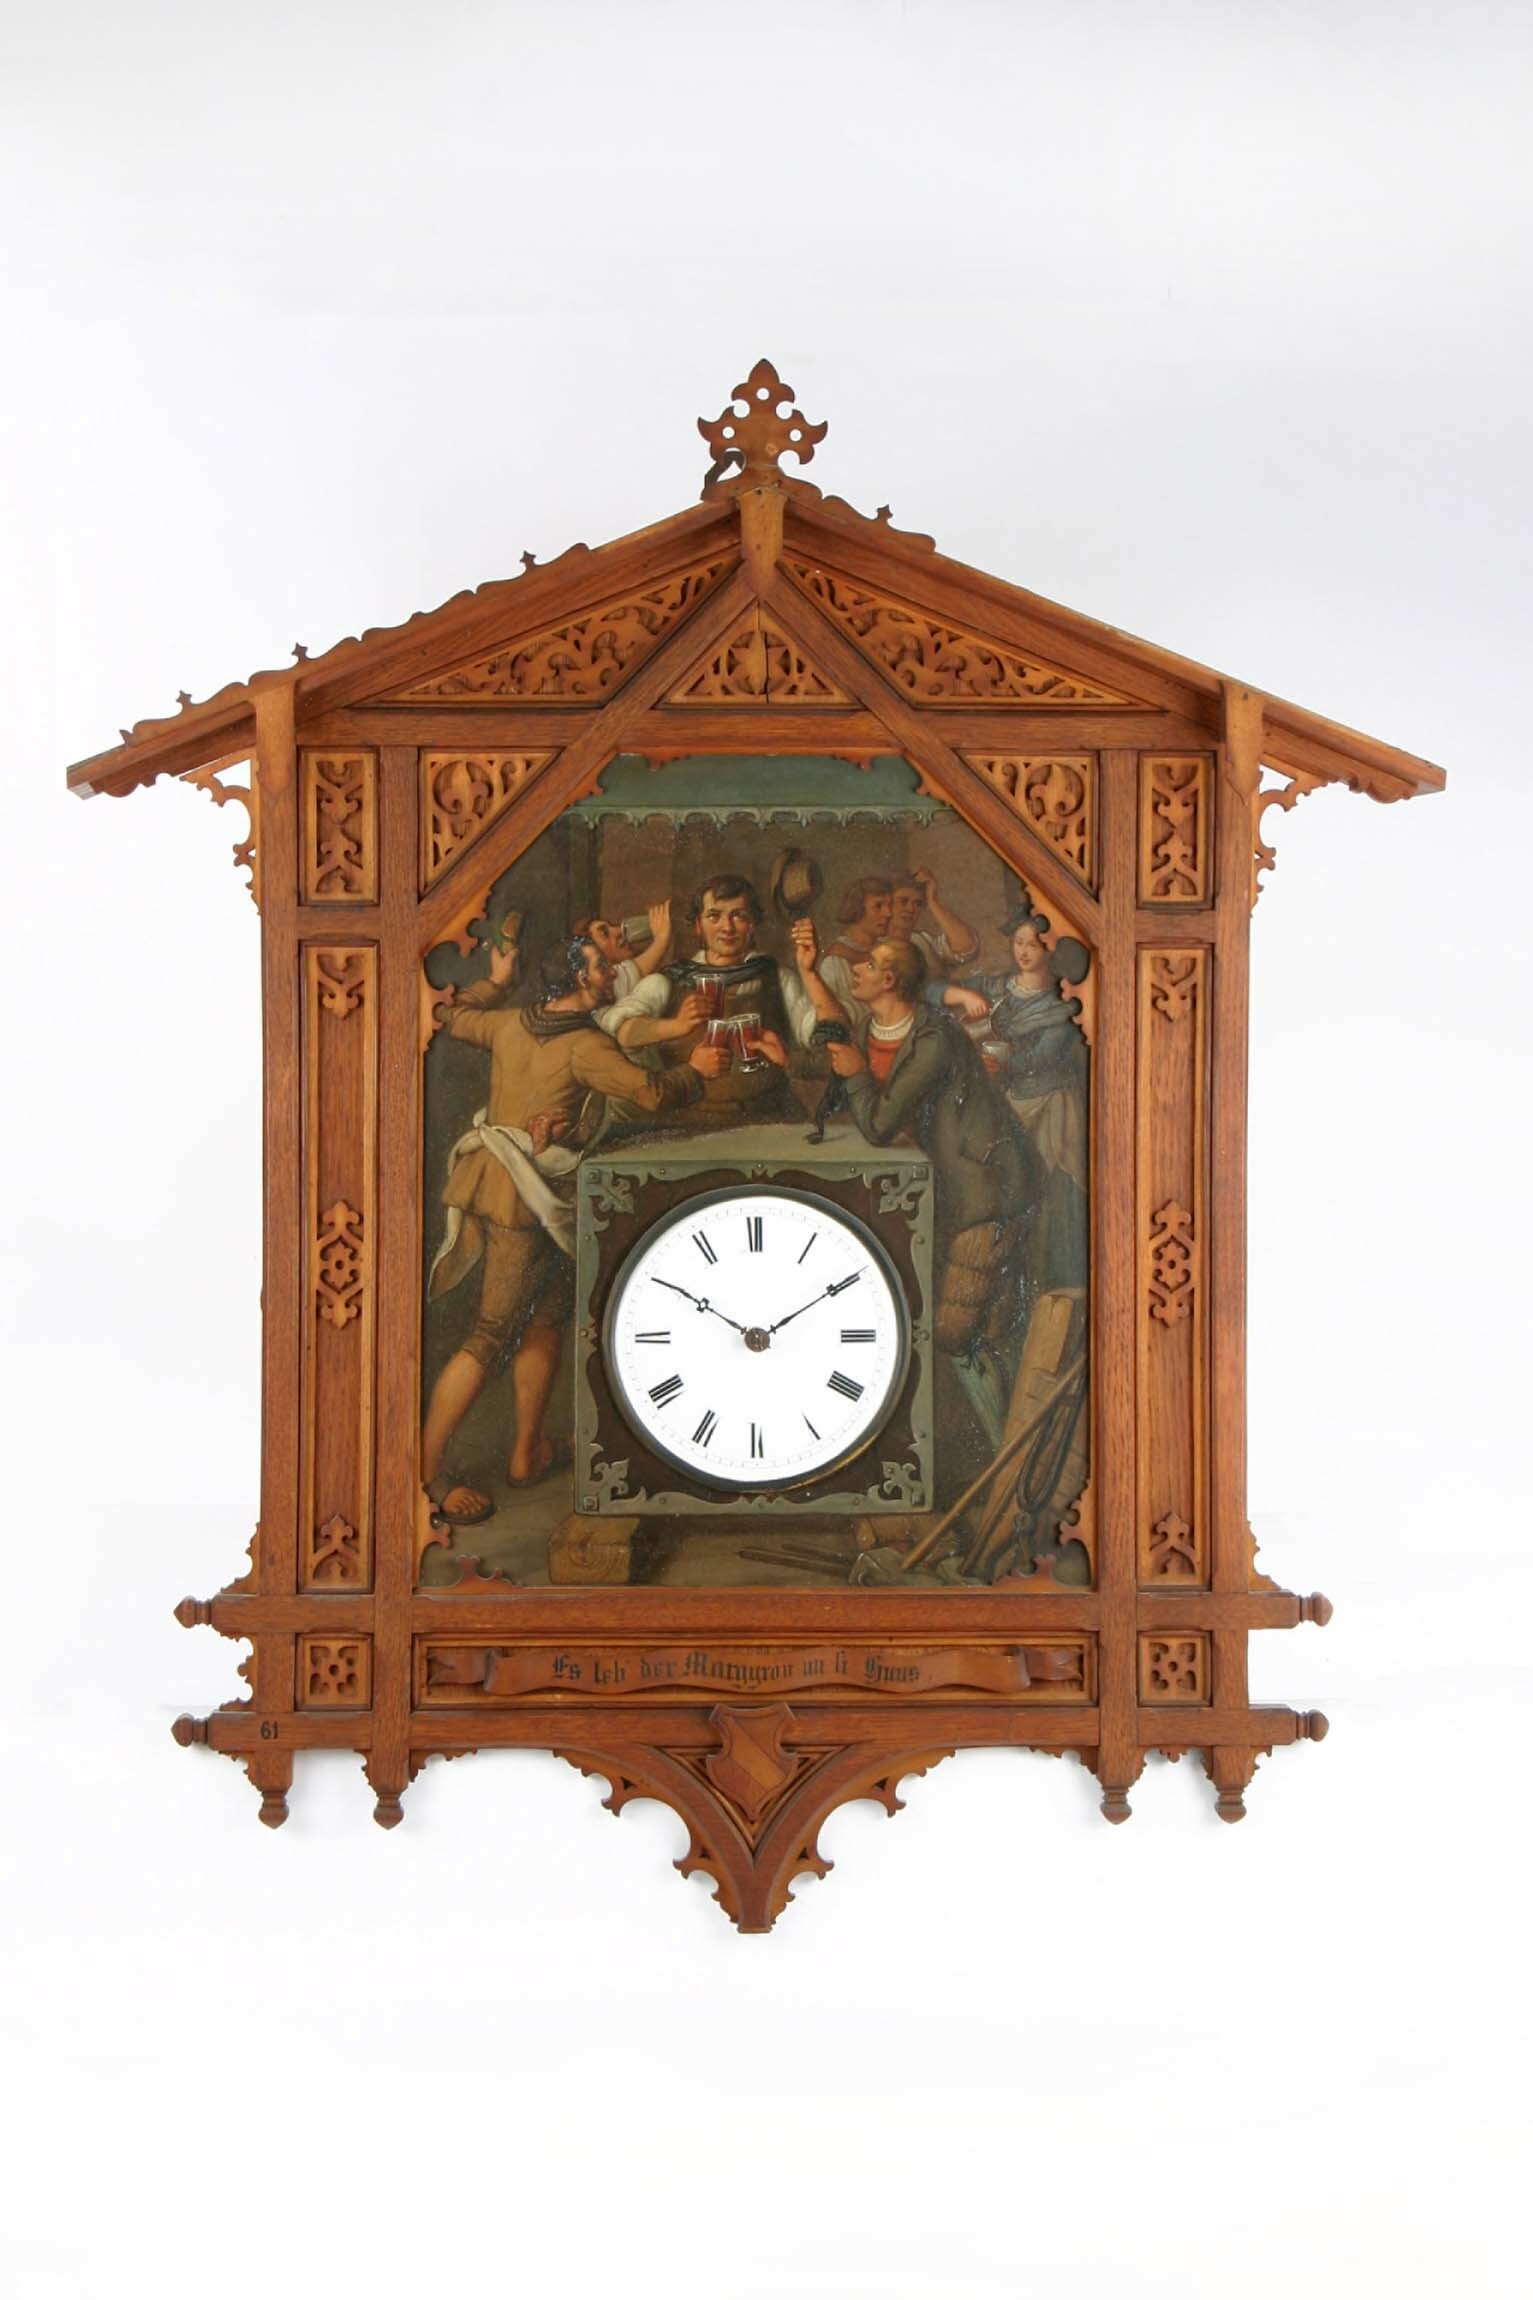 Bahnhäusleuhr, Heinrich Frank, Karlsruhe, Johann Baptist Laule, Furtwangen, 1861 (Deutsches Uhrenmuseum CC BY-SA)